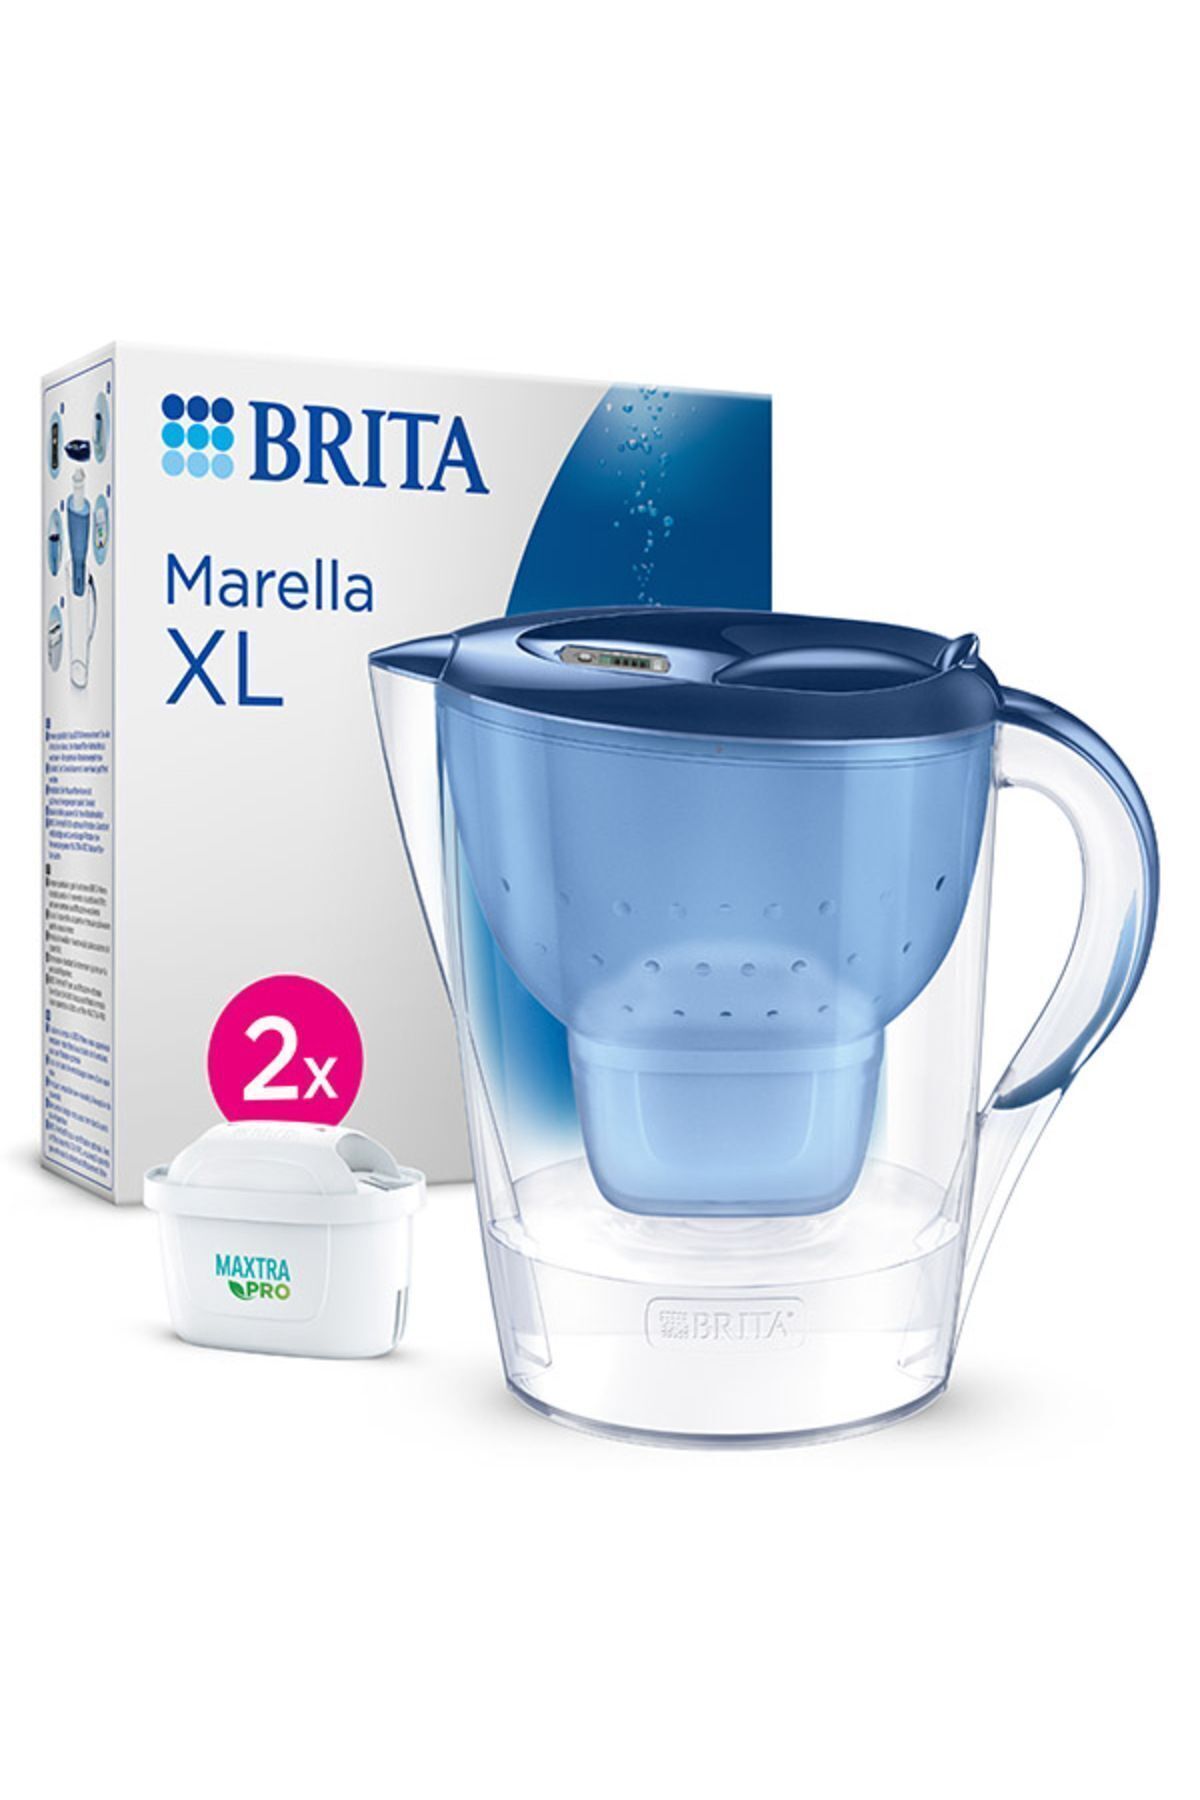 Brita Marella Xl 2x Maxtra Pro All-ın-1 Filtreli Su Arıtma Sürahisi - Mavi